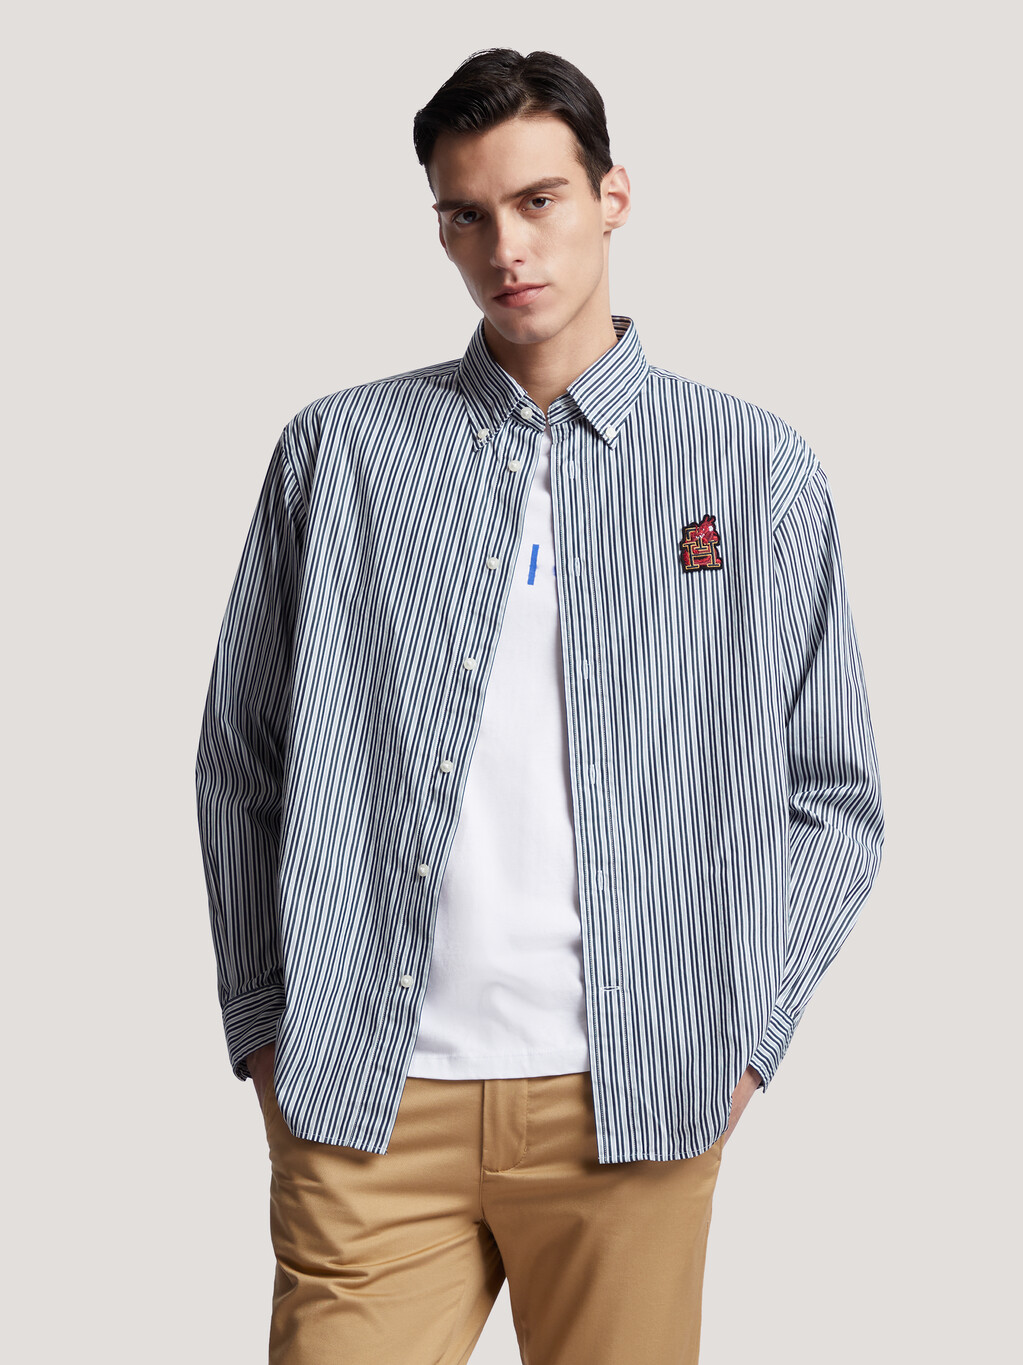 CNY Monogram Stripe Shirt, Desert Sky Stripes, hi-res